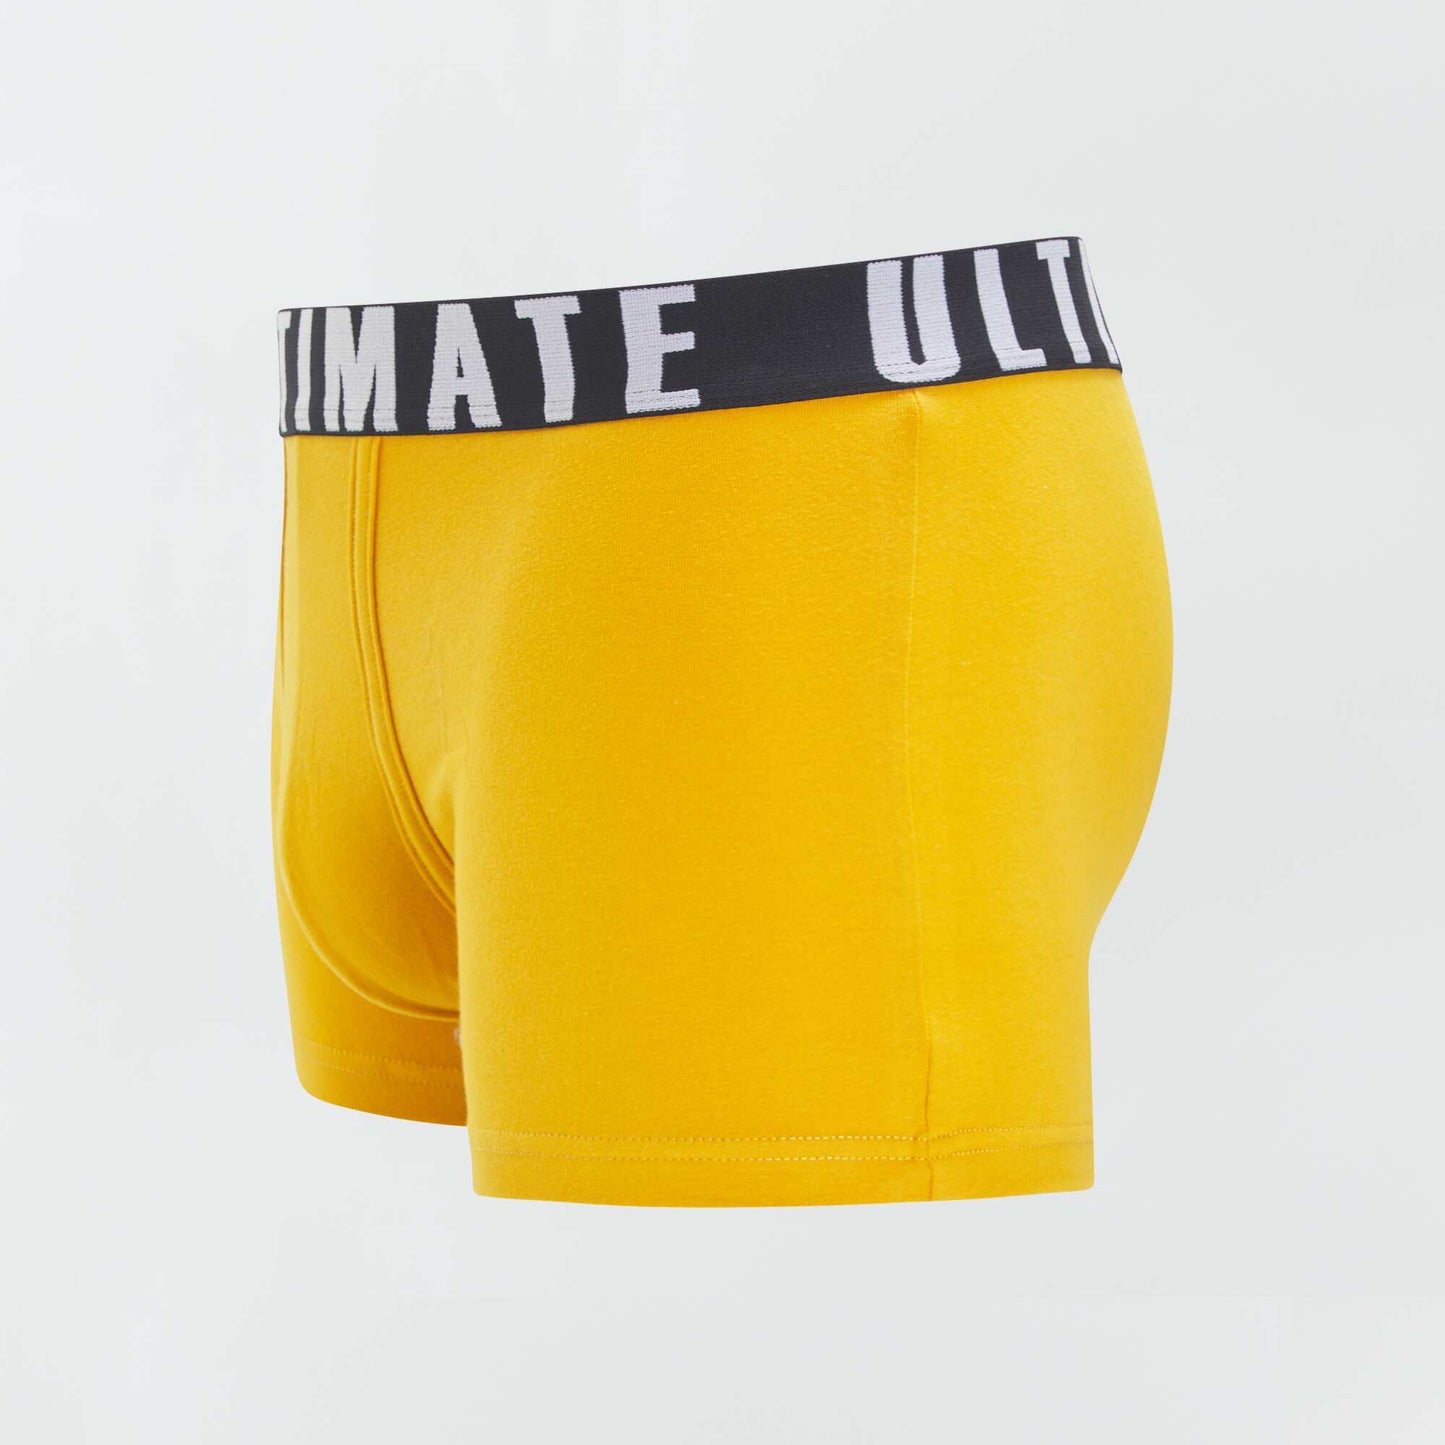 Pack of 3 patterned boxer shorts SNAKE